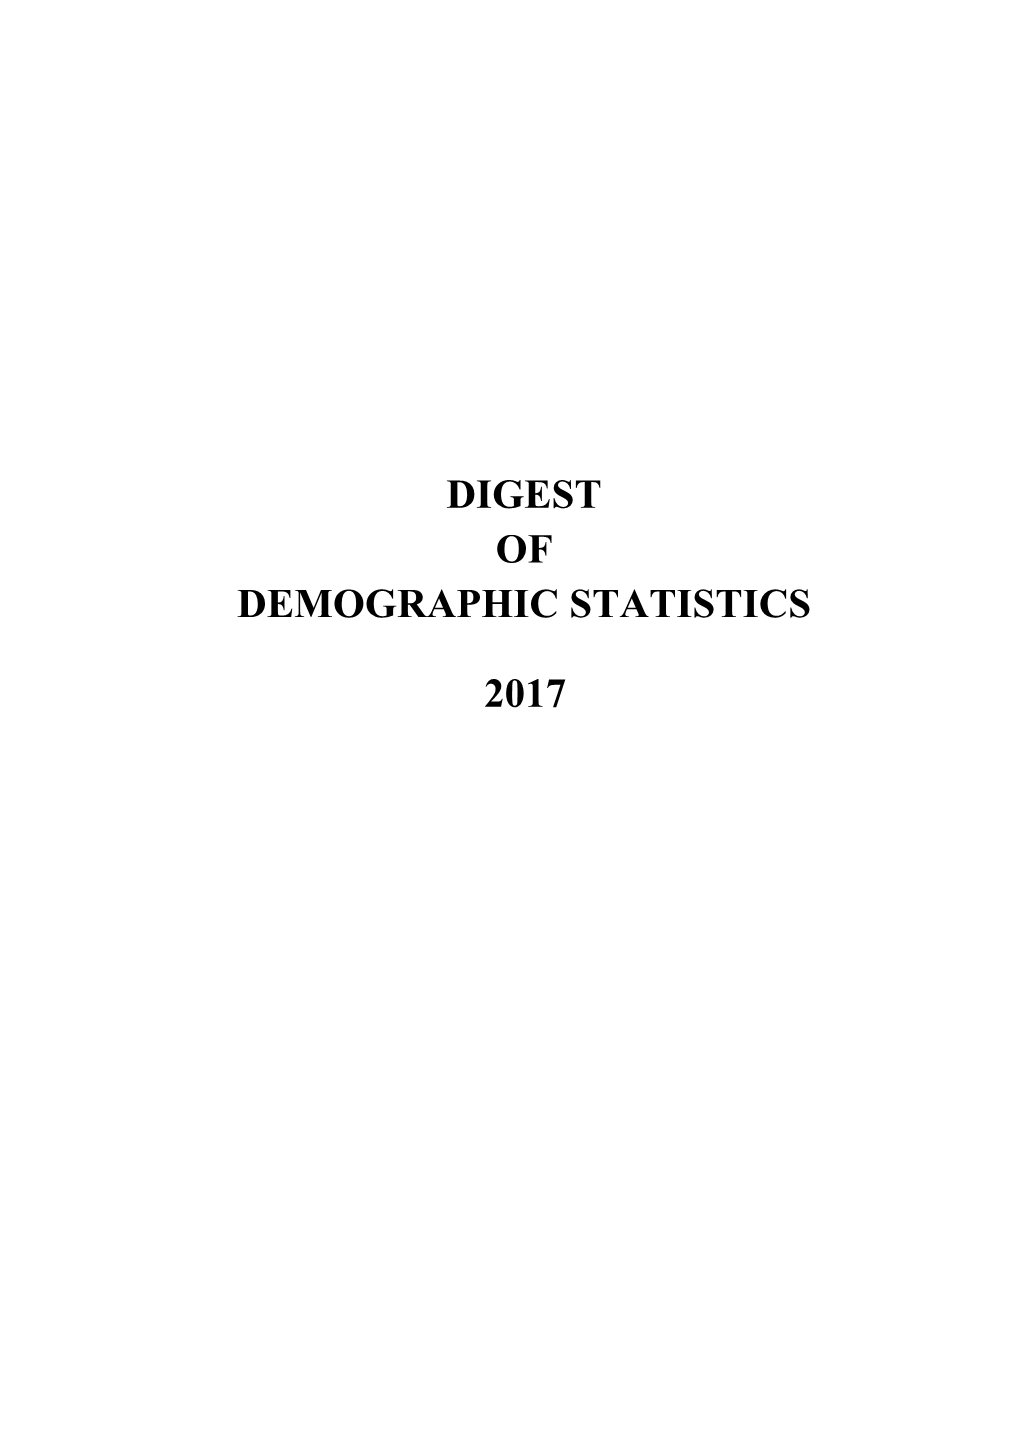 Digest of Demographic Statistics 2017